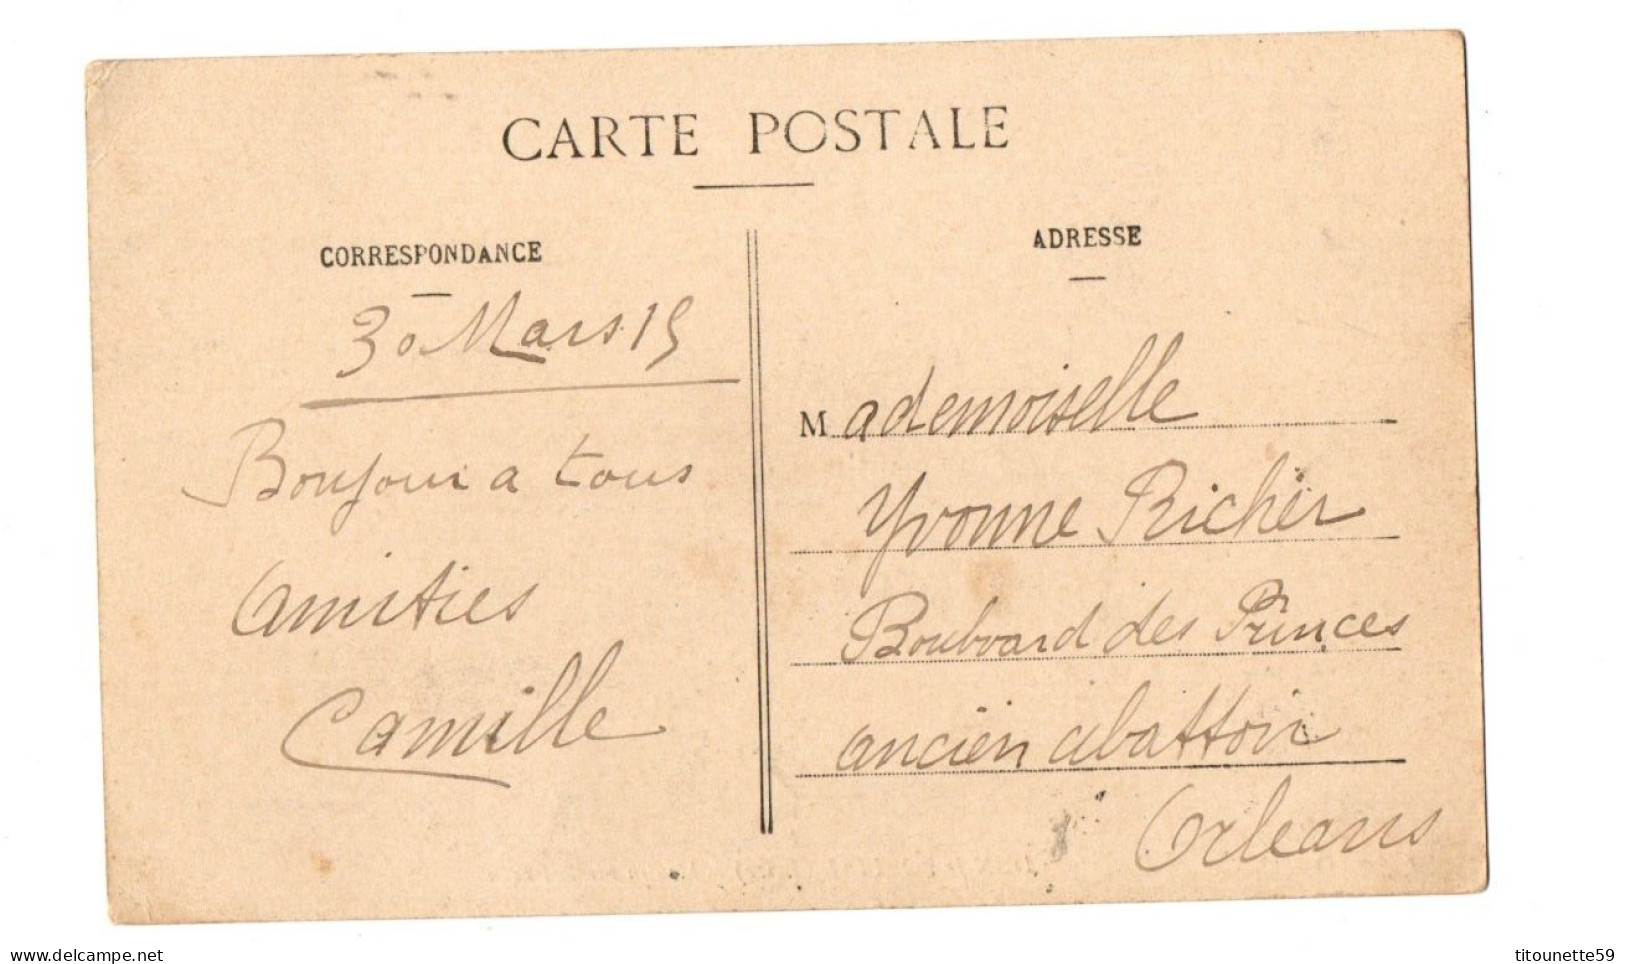 36- DUN-le-POELIER (Indre)- MOULIN- ECRITE- TIMBREE-1915 - Andere & Zonder Classificatie